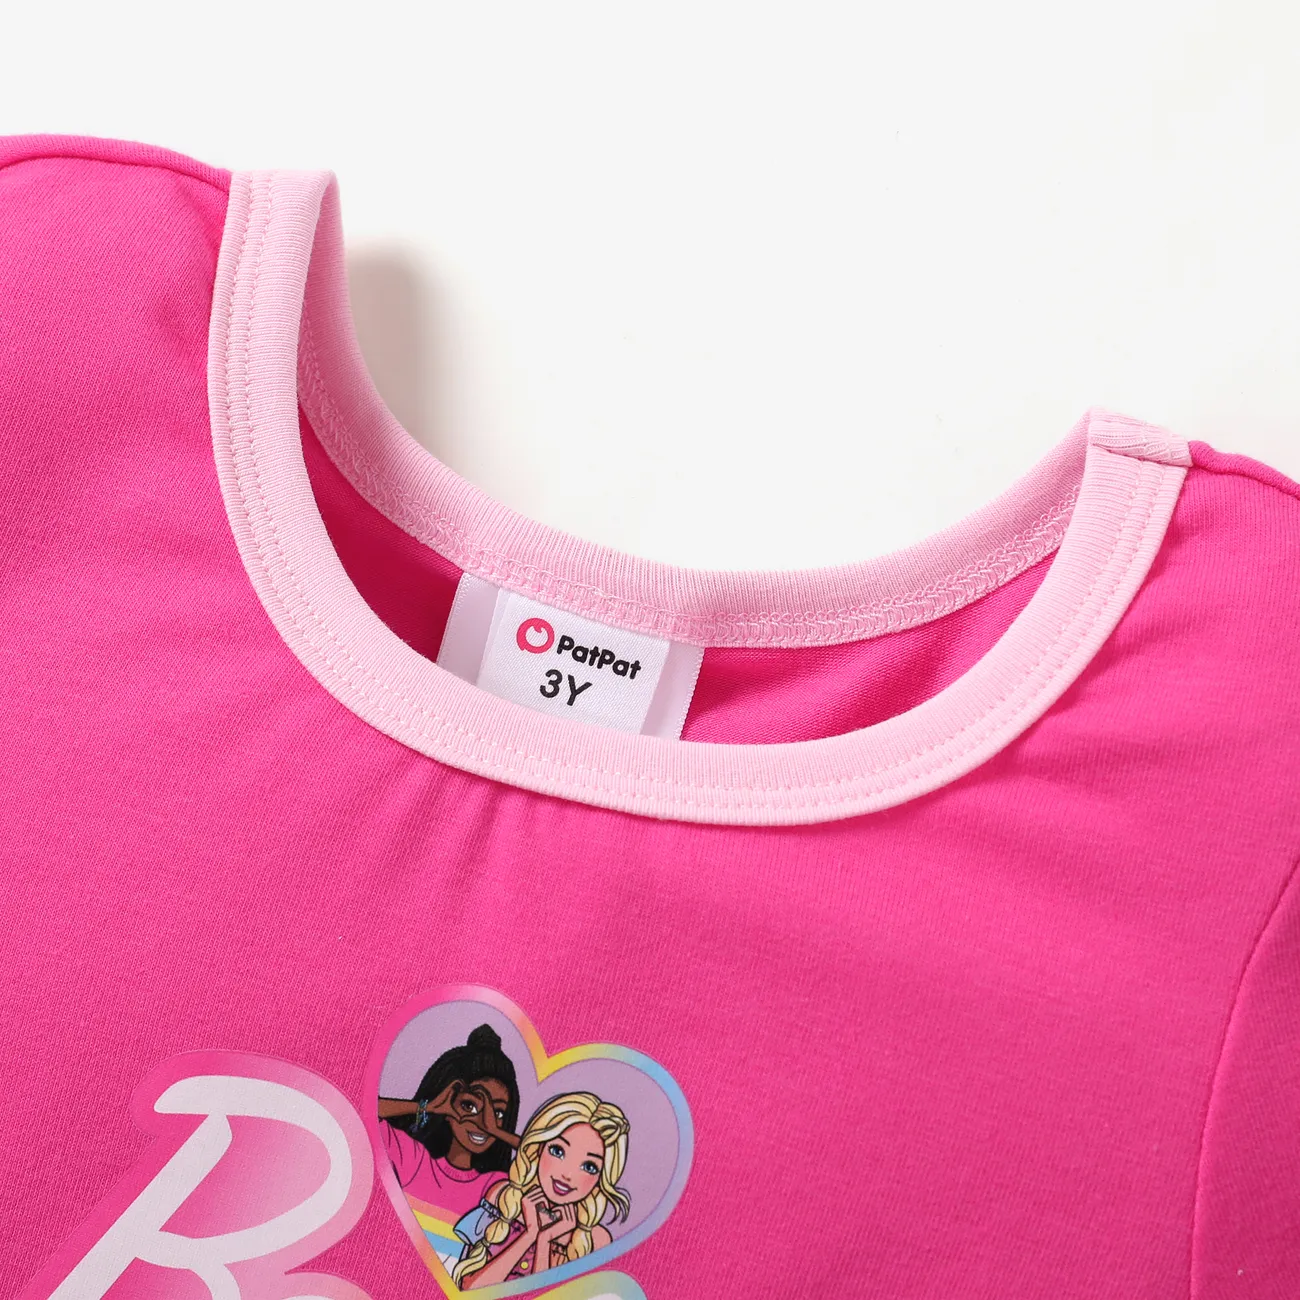 Barbie 1pc Toddler/Kids Girls Rainbow Letter Print T-shirt

 PINK-1 big image 1